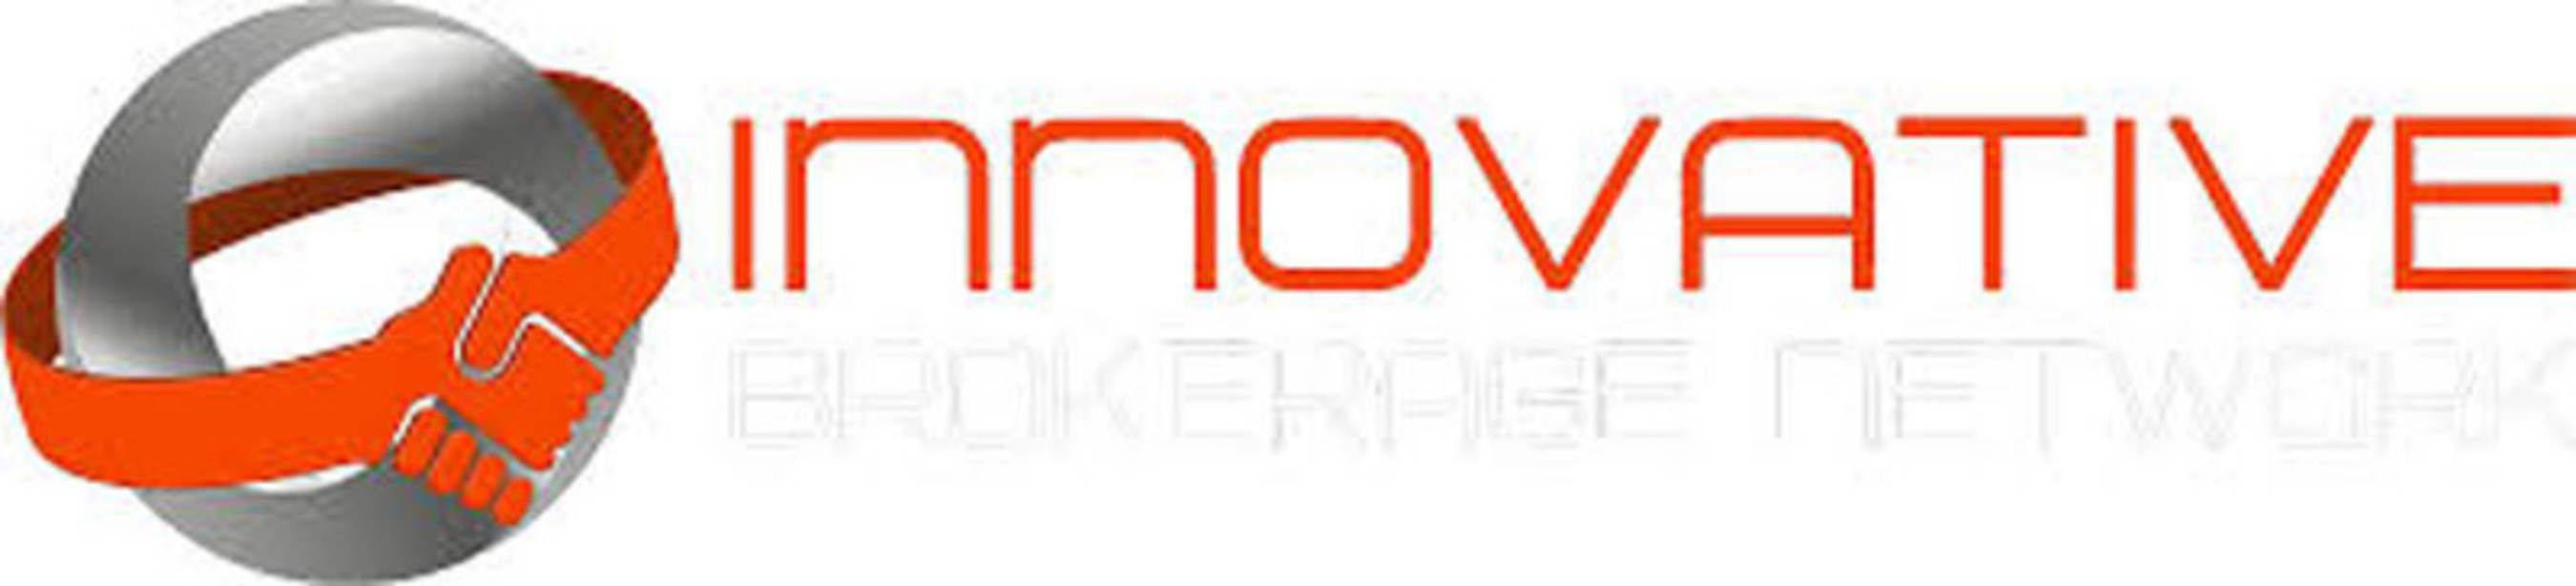 Innovative Brokerage Network logo. (PRNewsFoto/Innovative Brokerage Network) (PRNewsFoto/INNOVATIVE BROKERAGE NETWORK)